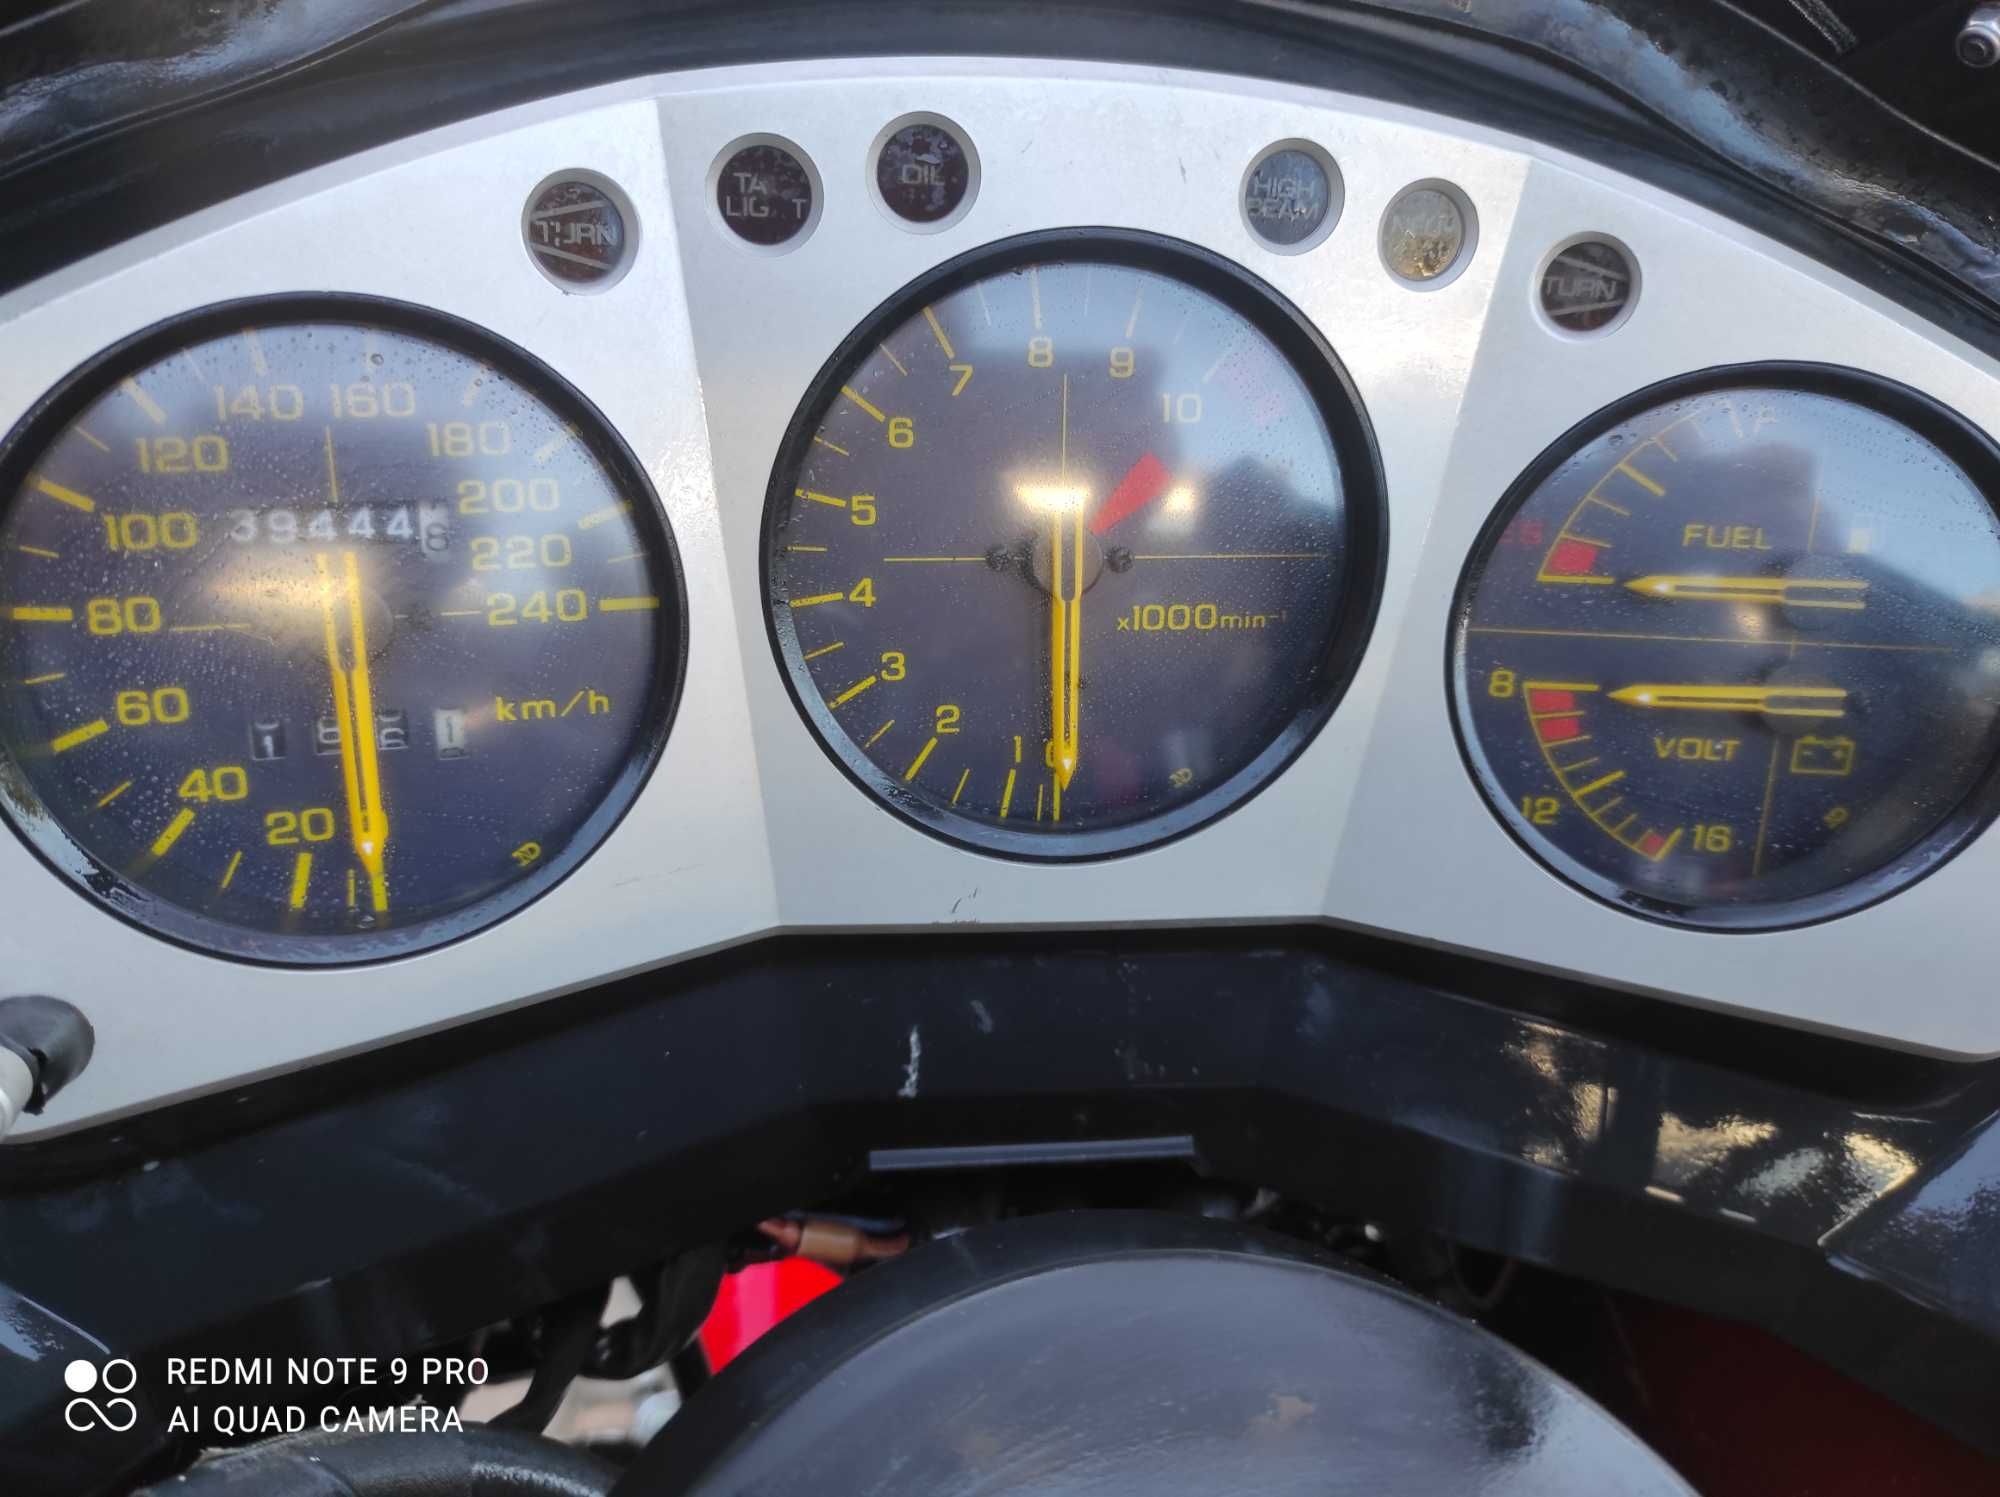 Honda CBX 750 Z Niemiec